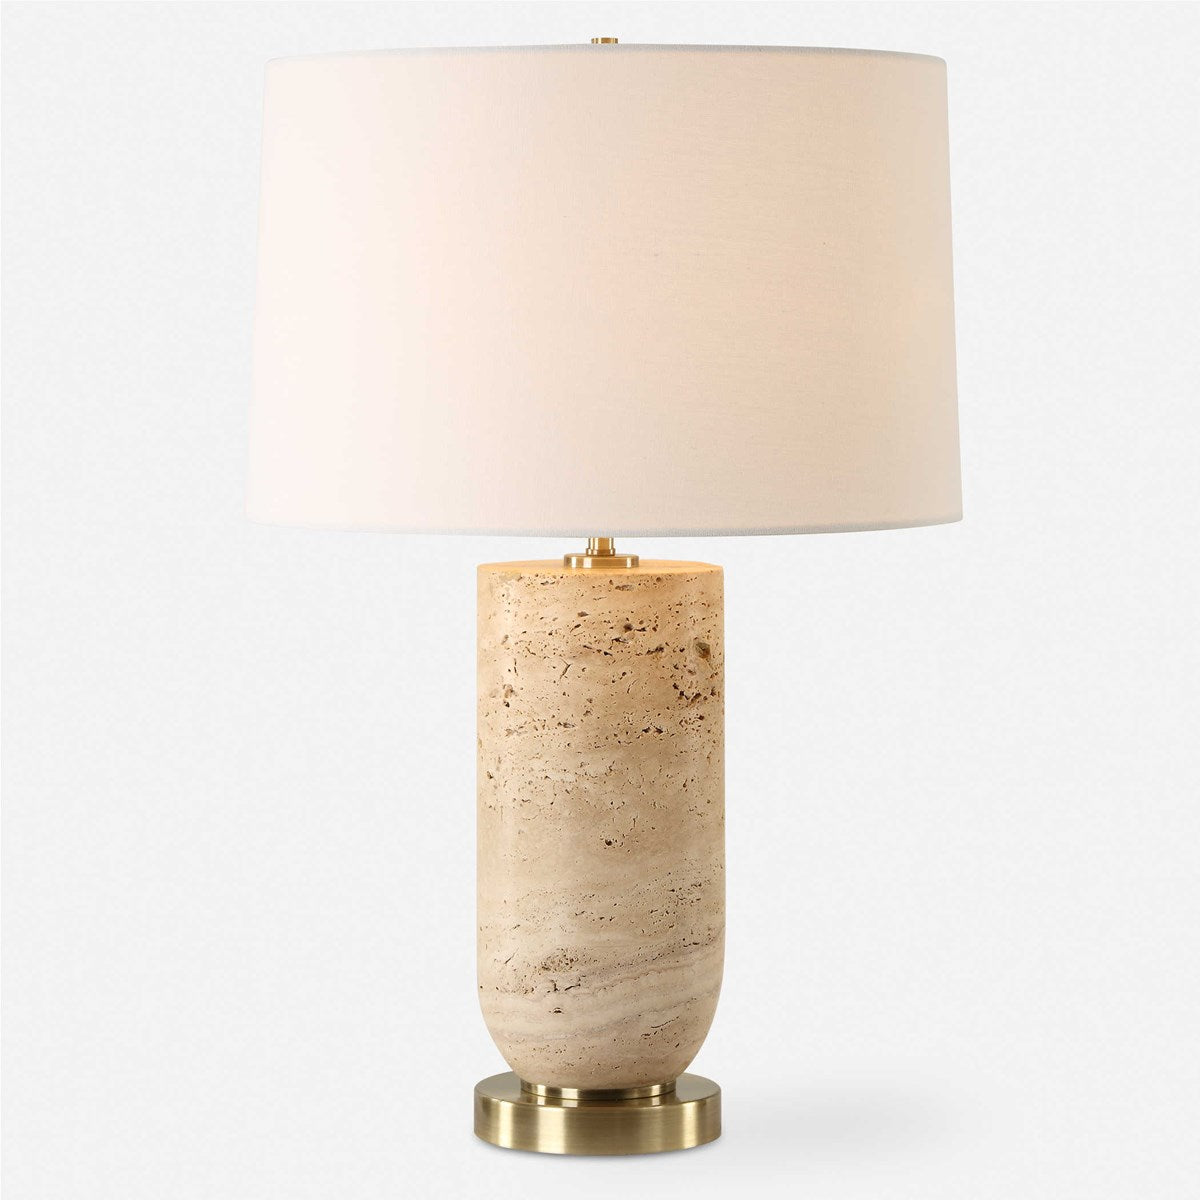 Uttermost - 30409-1 - One Light Table Lamp - Aubrey - Antique Brass